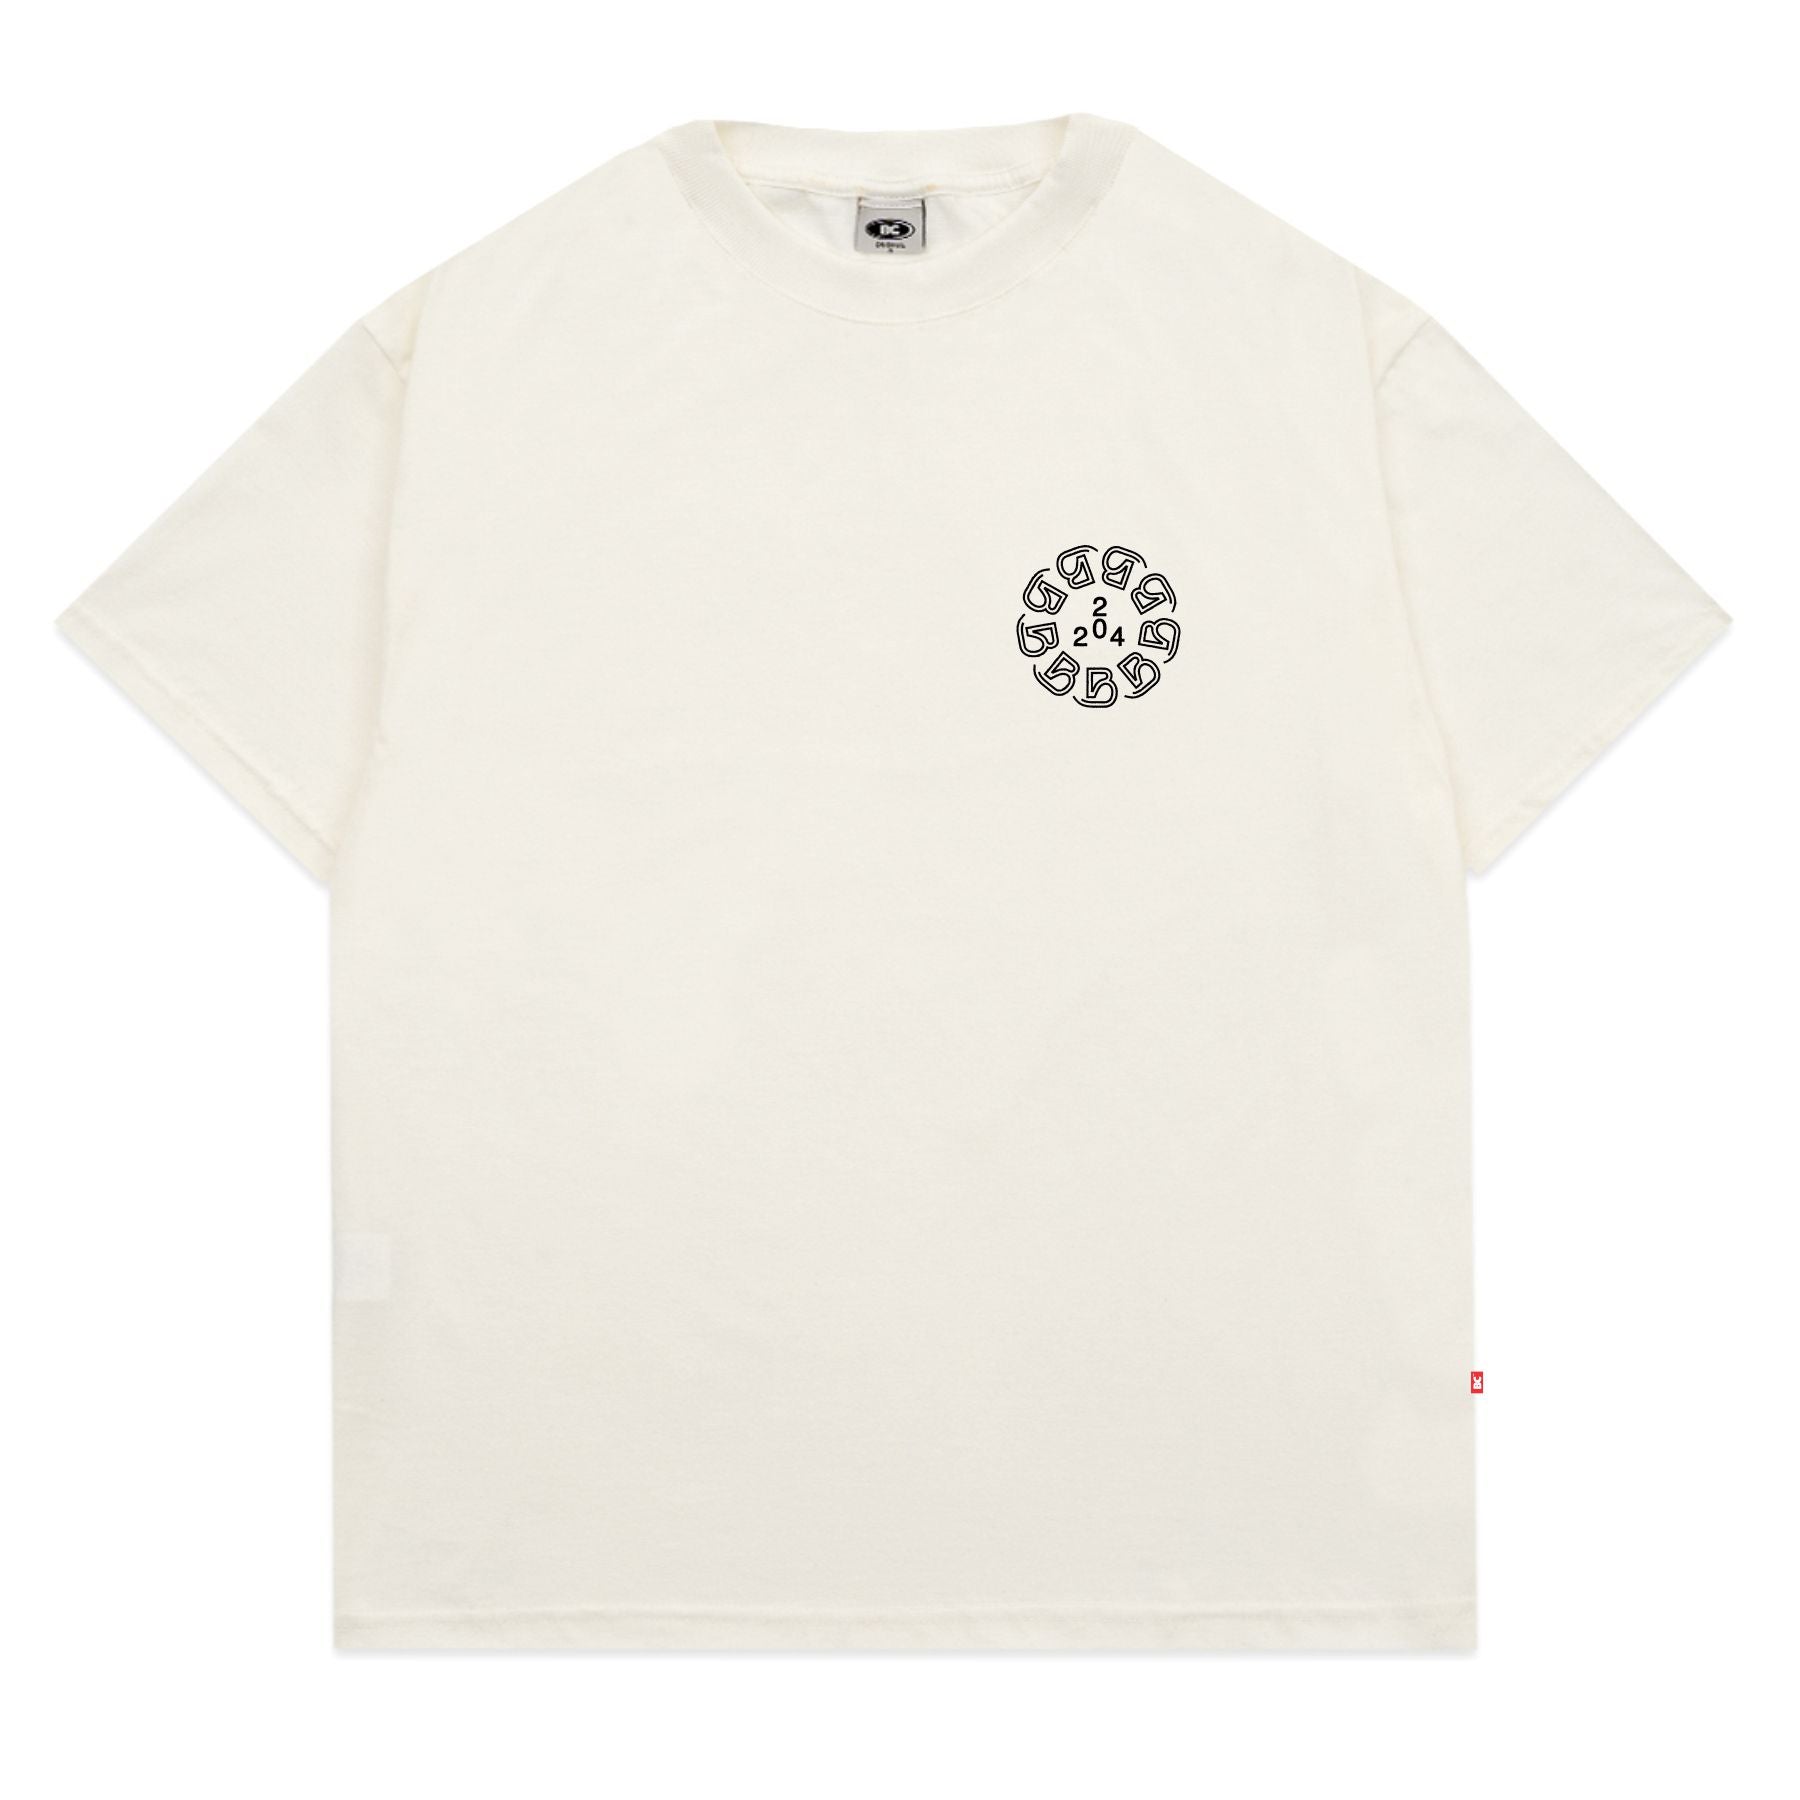 Barra Crew - Camiseta Brasão Off White